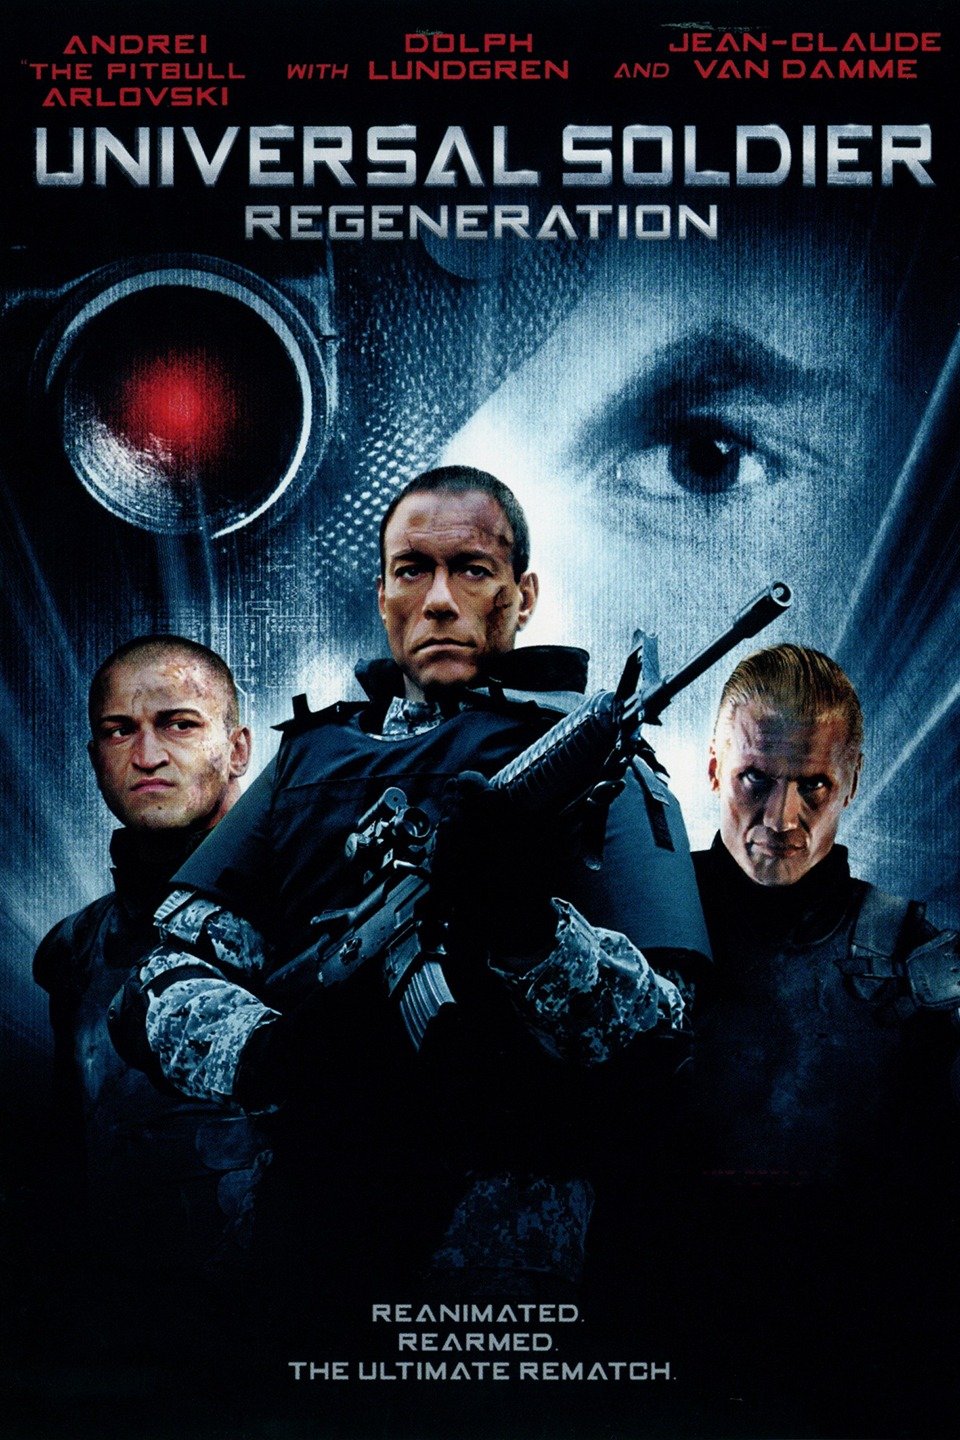 [FULL-HD LHQ] Universal Soldier: Regeneration (2009) 2 คนไม่ใช่คน สงครามสมองกลพันธุ์ใหม่ ภาค 3 [1080p] [พากย์ไทย 5.1 + เสียงอังกฤษ DTS] [บรรยายไทย + อังกฤษ] [เสียงไทย + ซับไทย] [OPENLOAD]